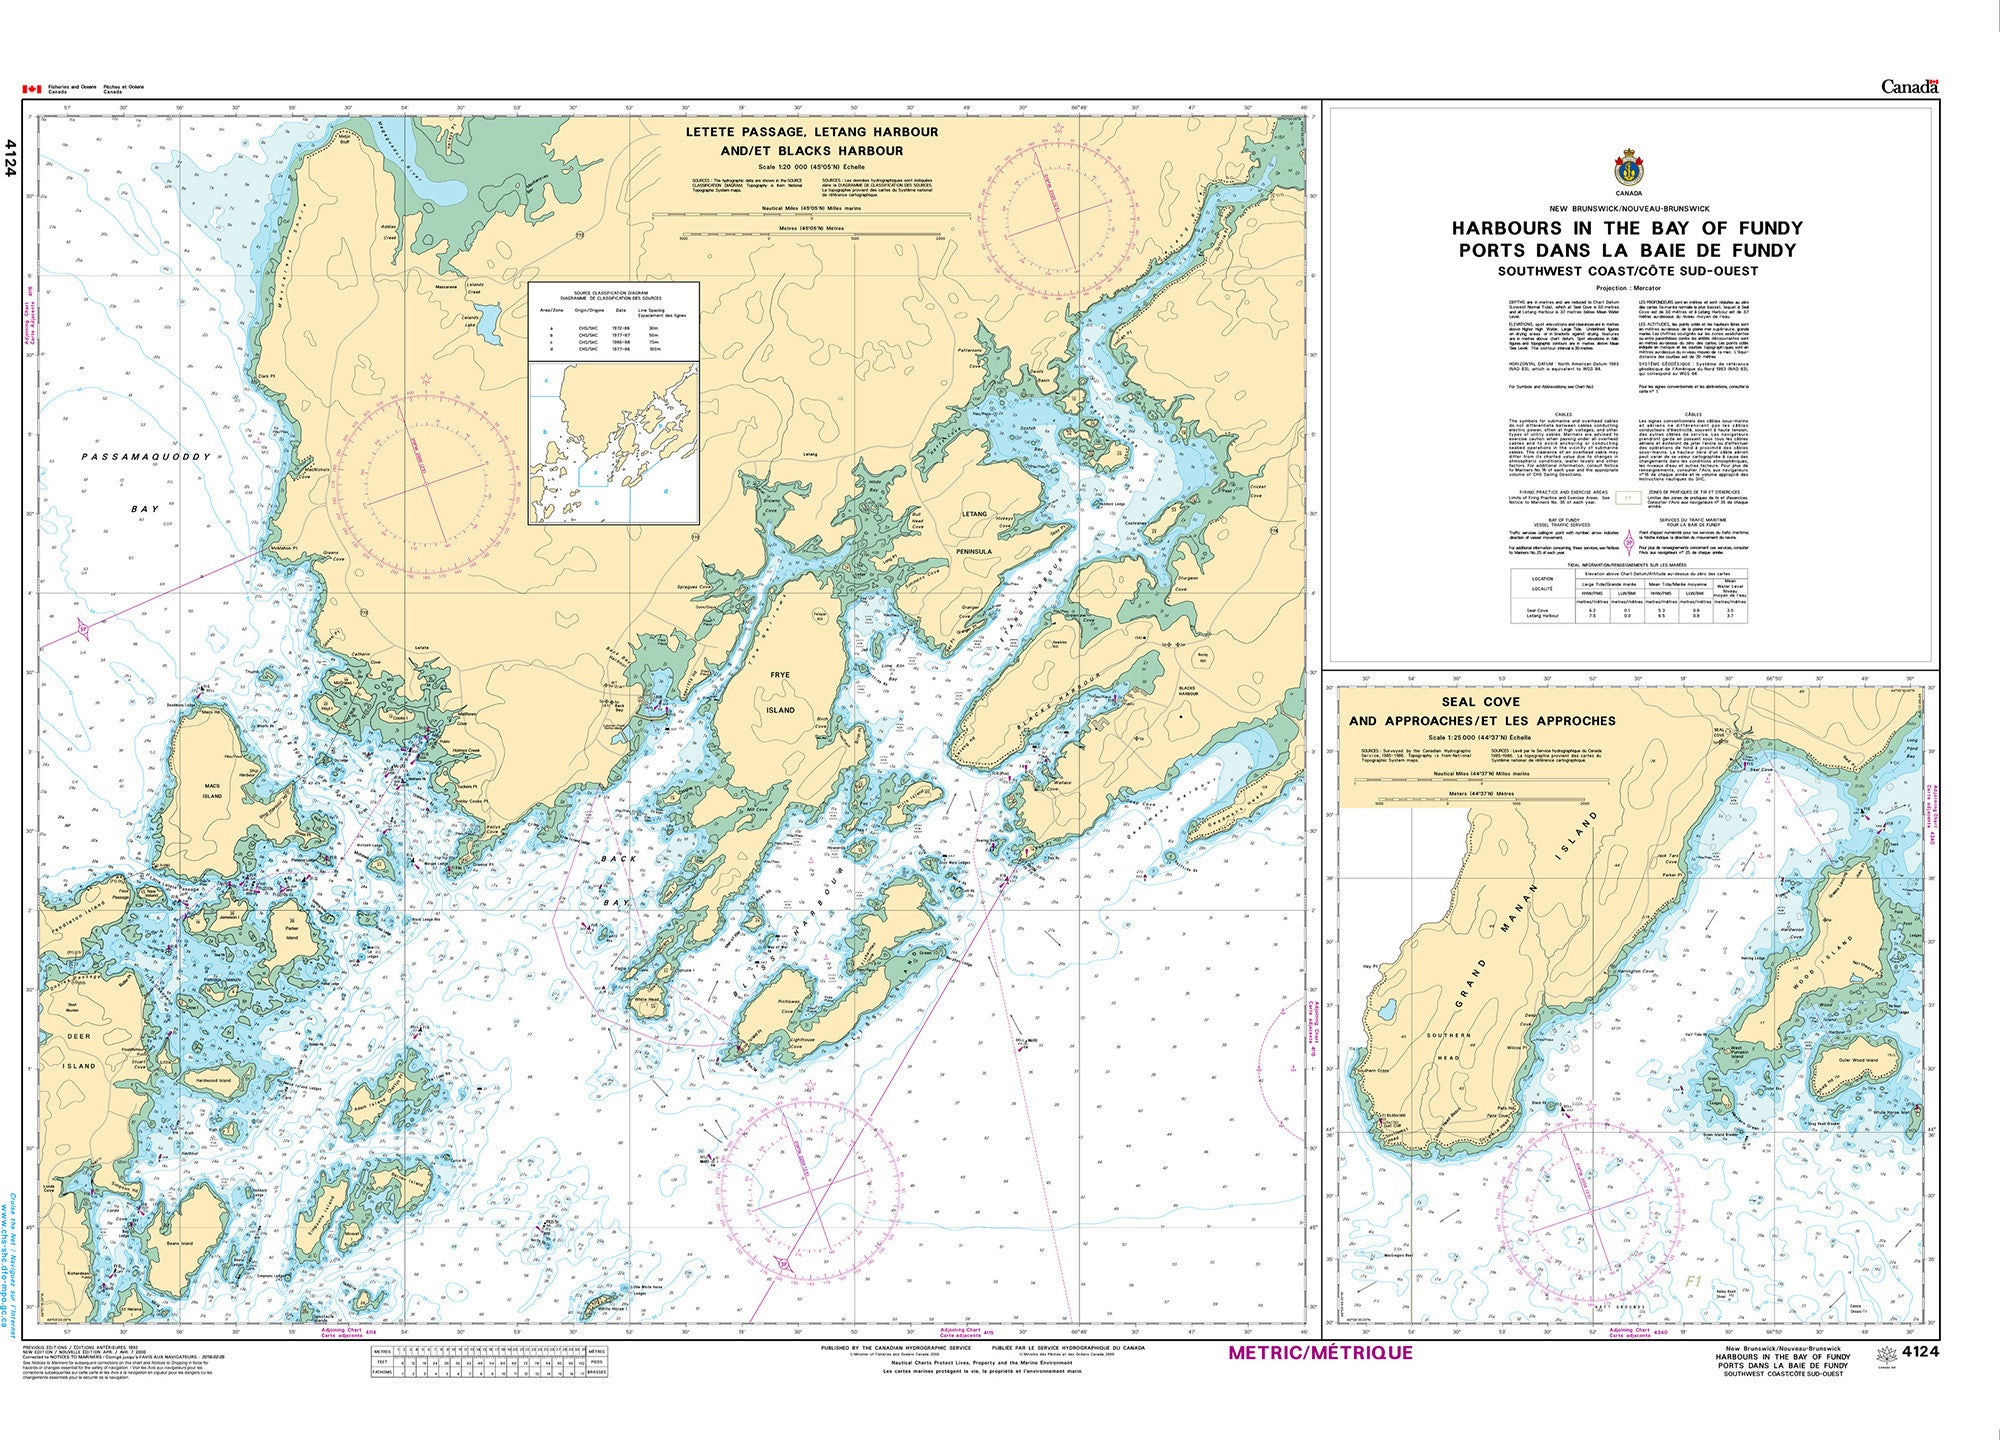 Canadian Hydrographic Service Nautical Chart CHS4124: Harbours in the Bay of Fundy/Ports dans la Baie de Fundy Southwest Coast/Côté sud-ouest